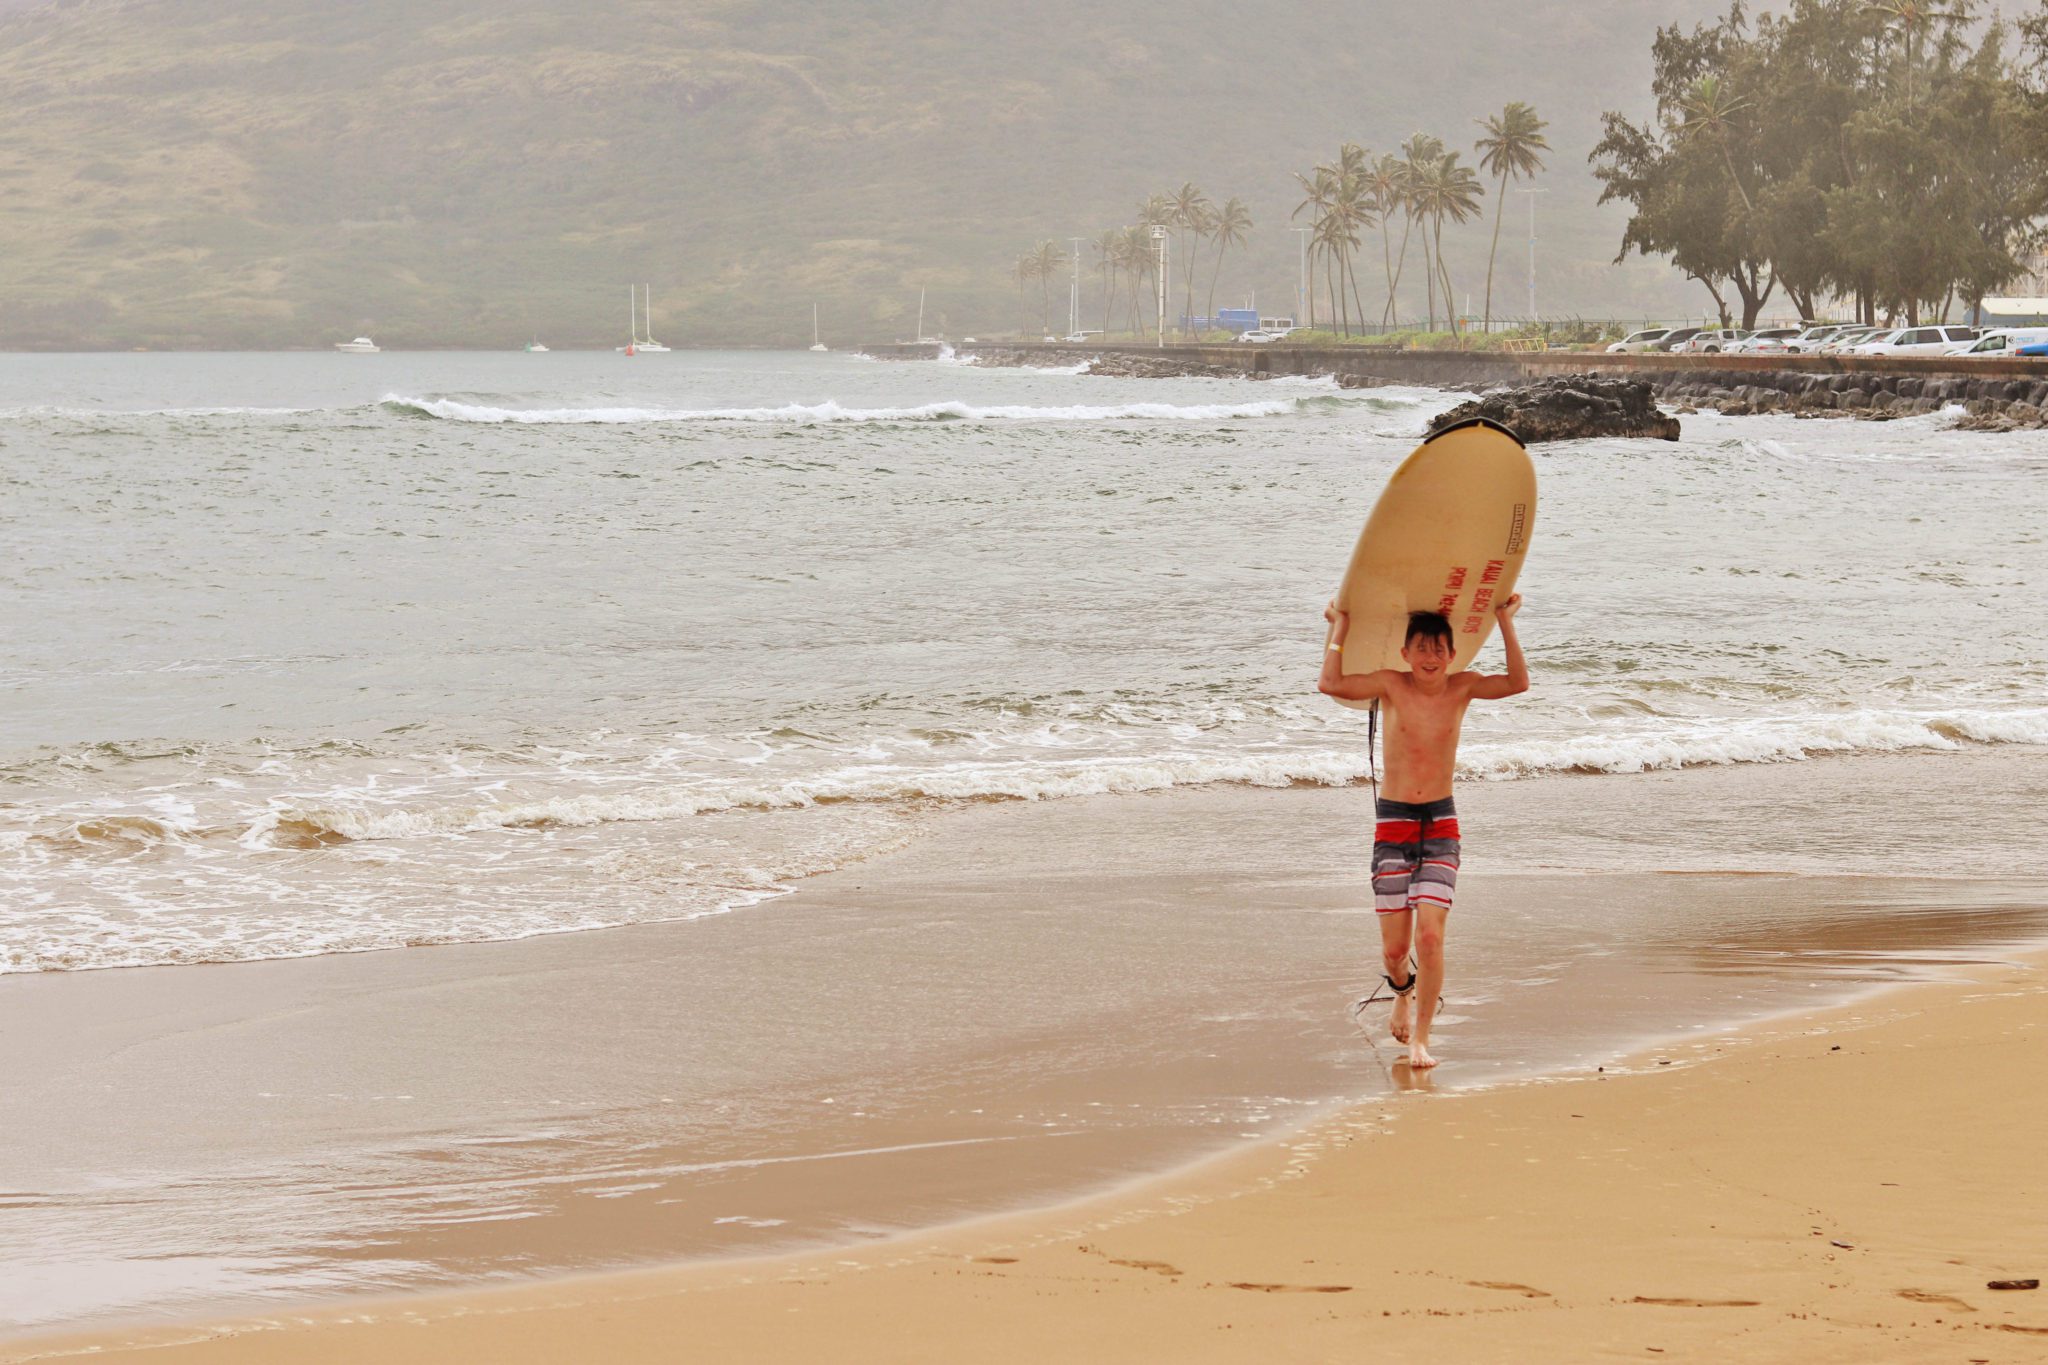 Best surf beaches in Kauai #kauai #hawaii #simplywander